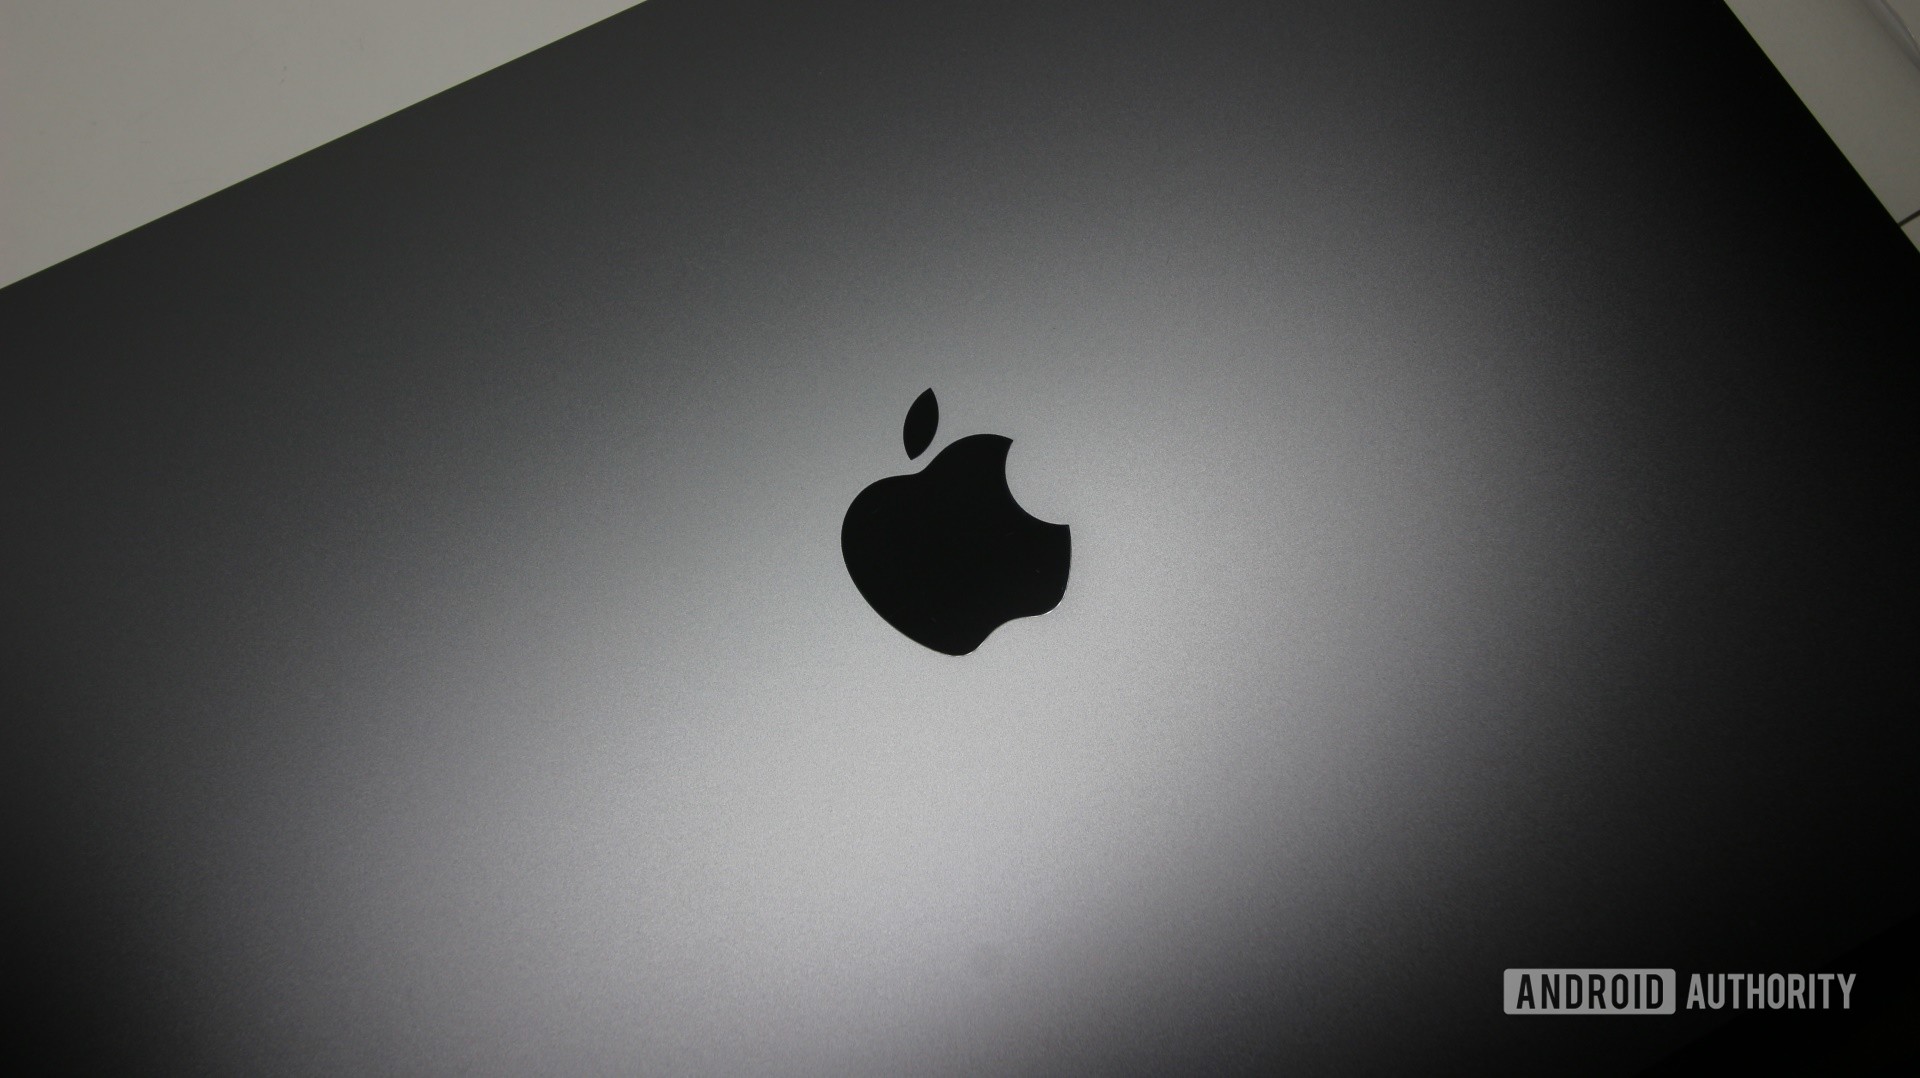 Apple MacBook Air M1 close up of logo